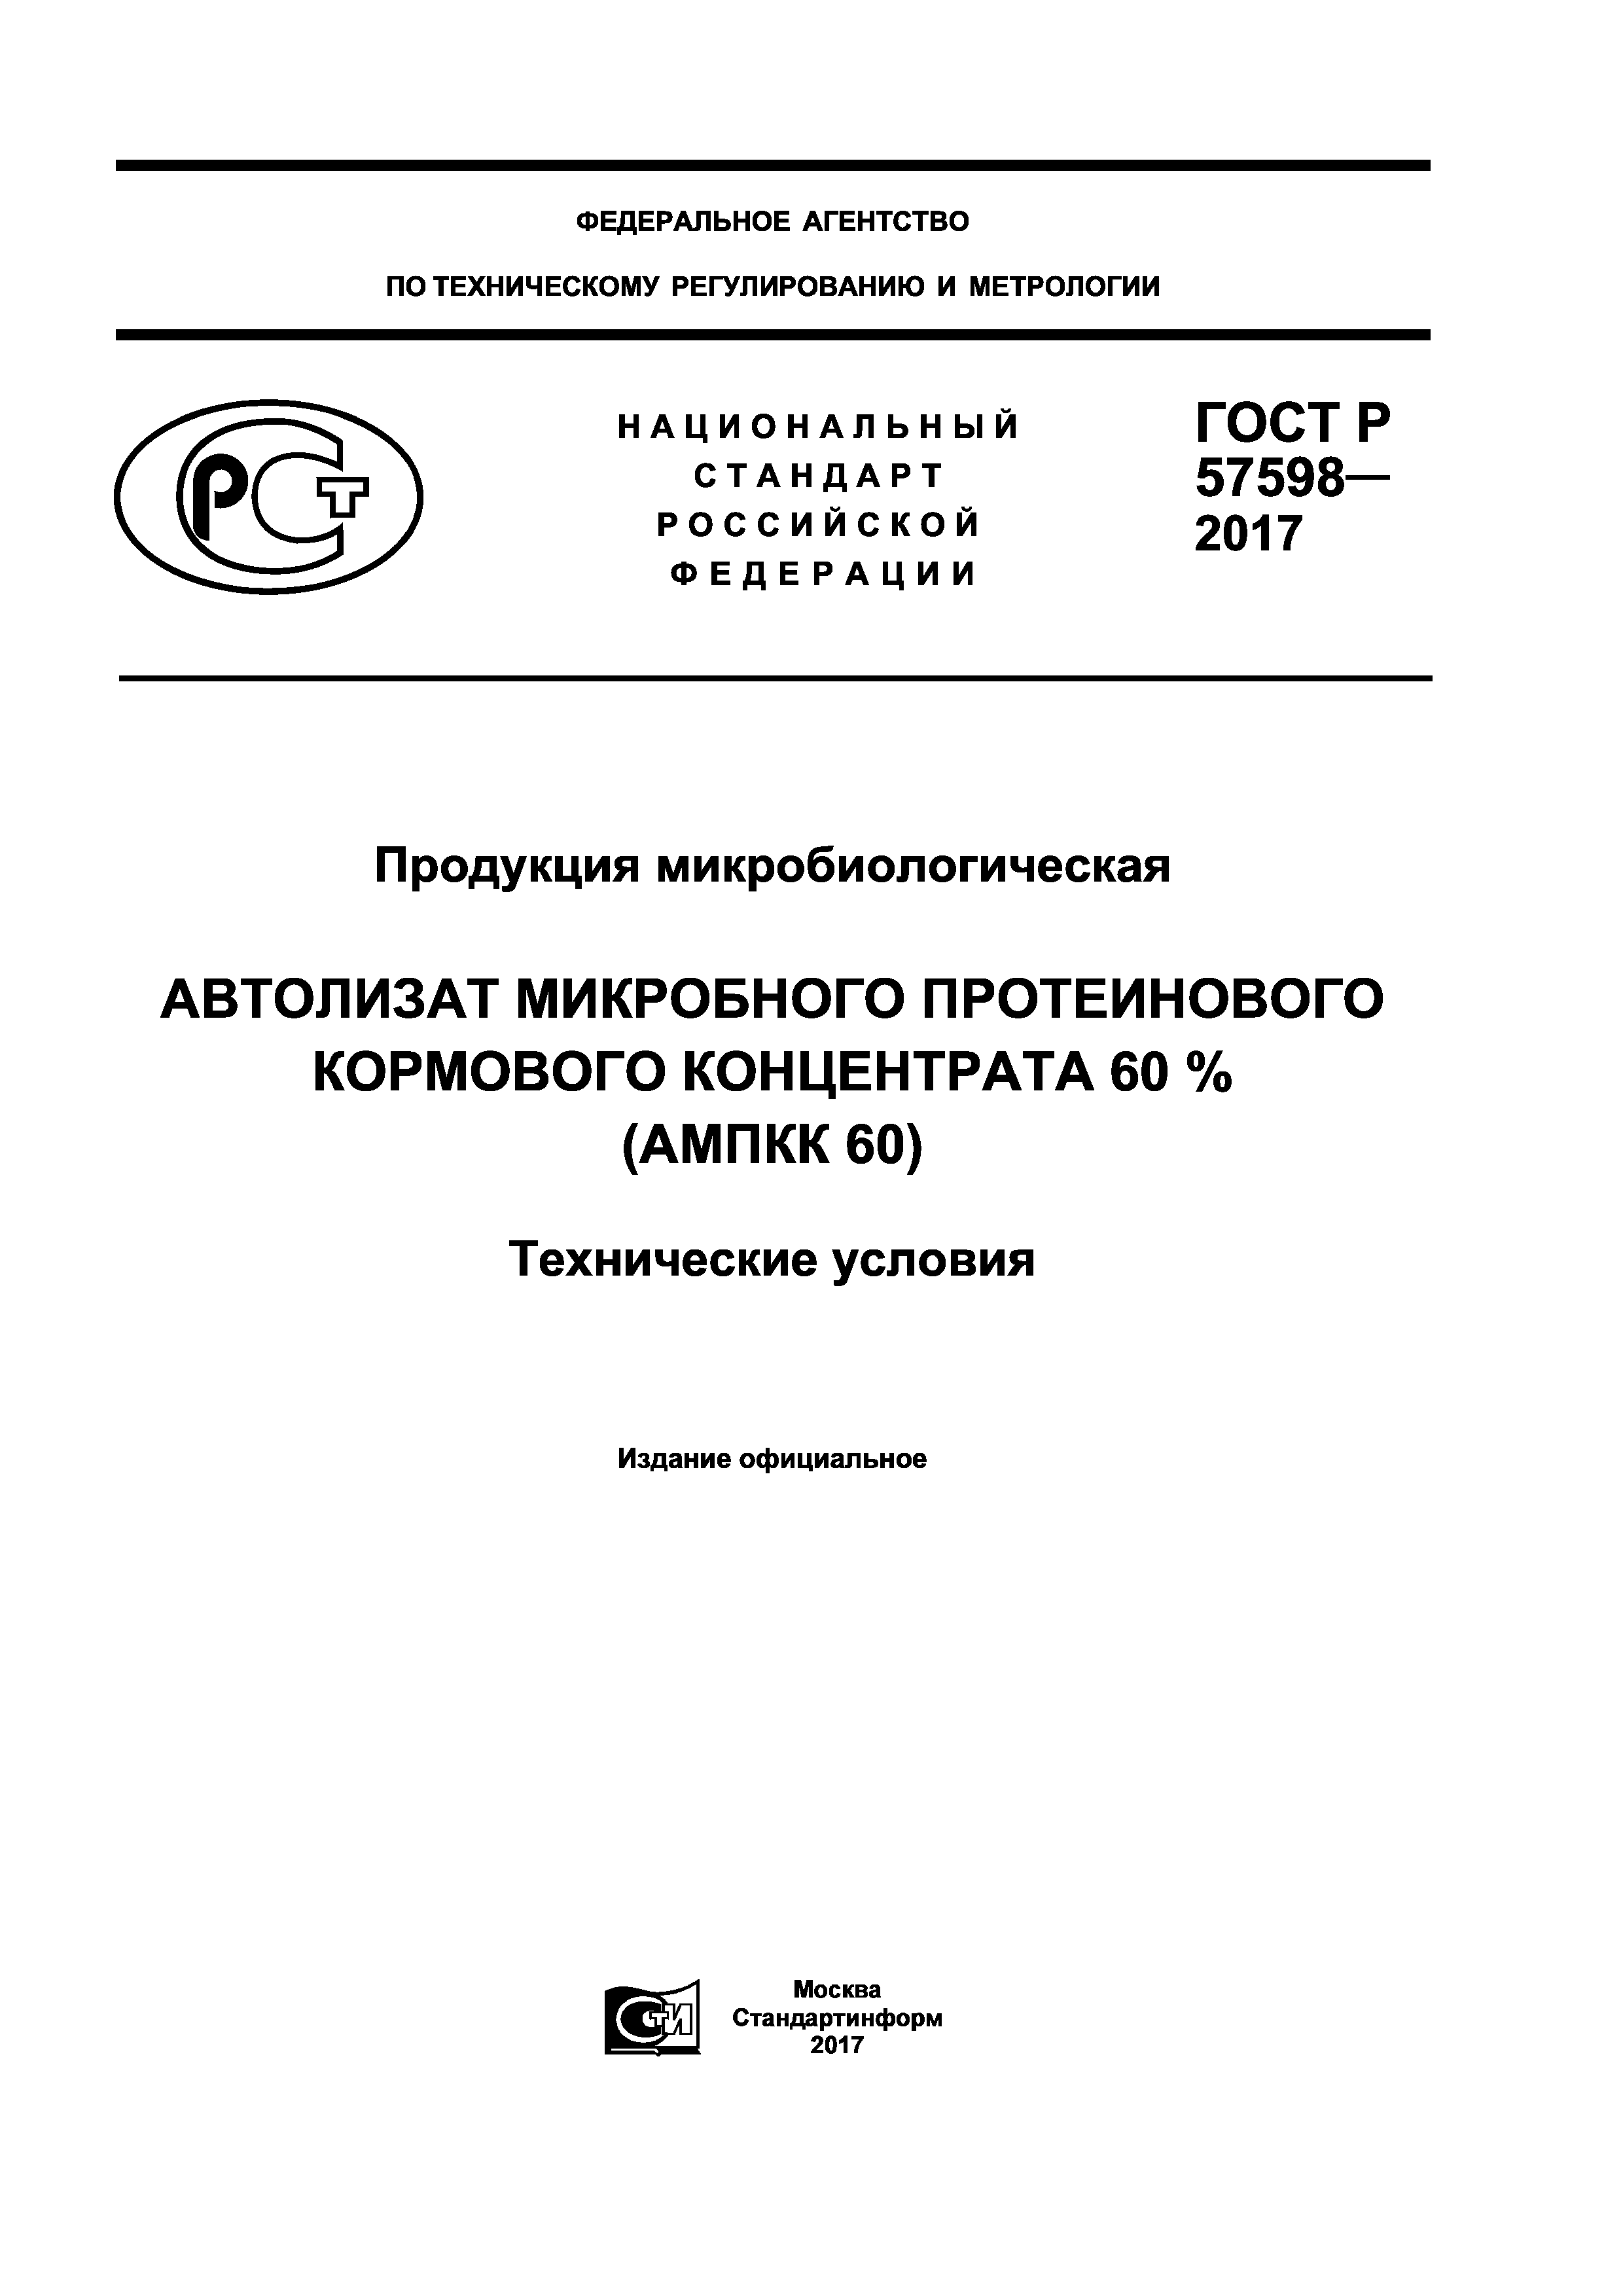 ГОСТ Р 57598-2017